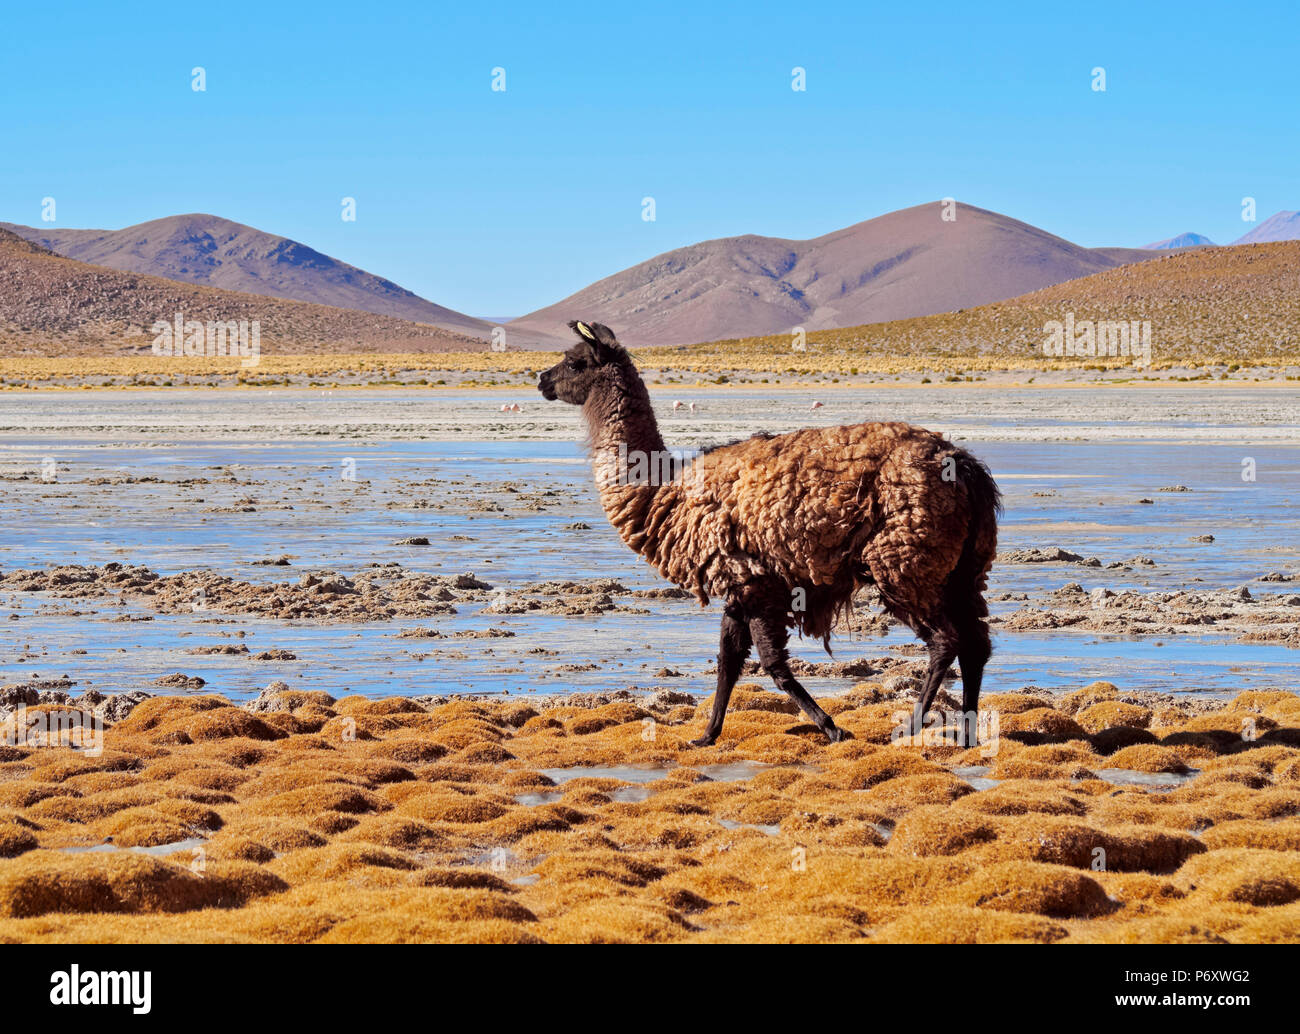 Bolivia, Potosi Departmant, Nor Lipez Province, Llama on the shore of the Laguna Yapi. Stock Photo